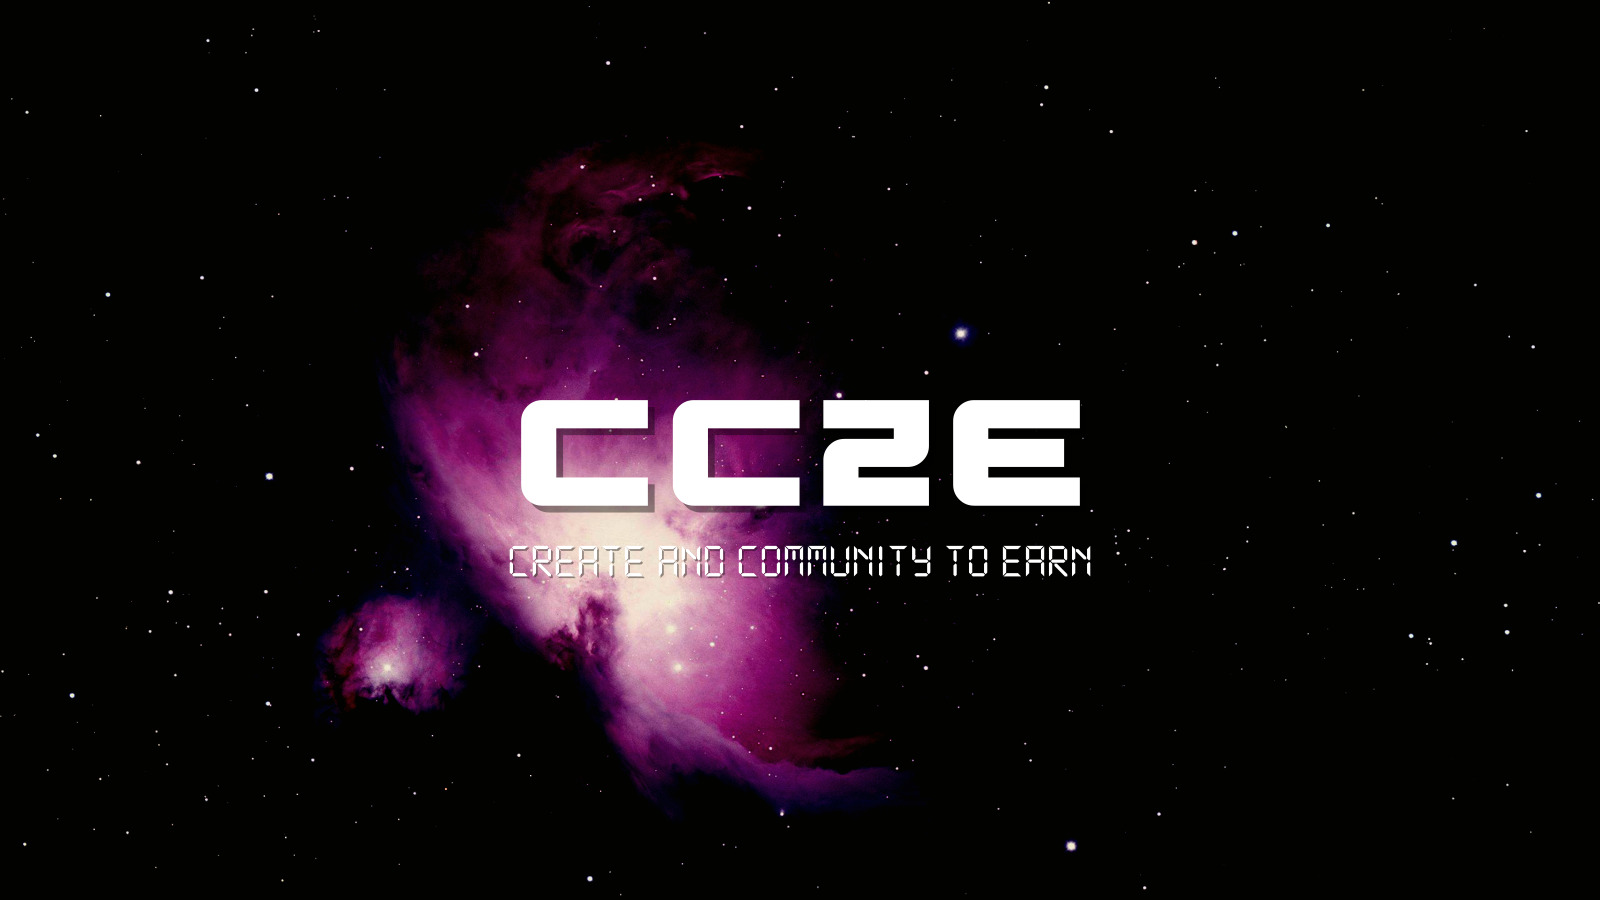 cc2e